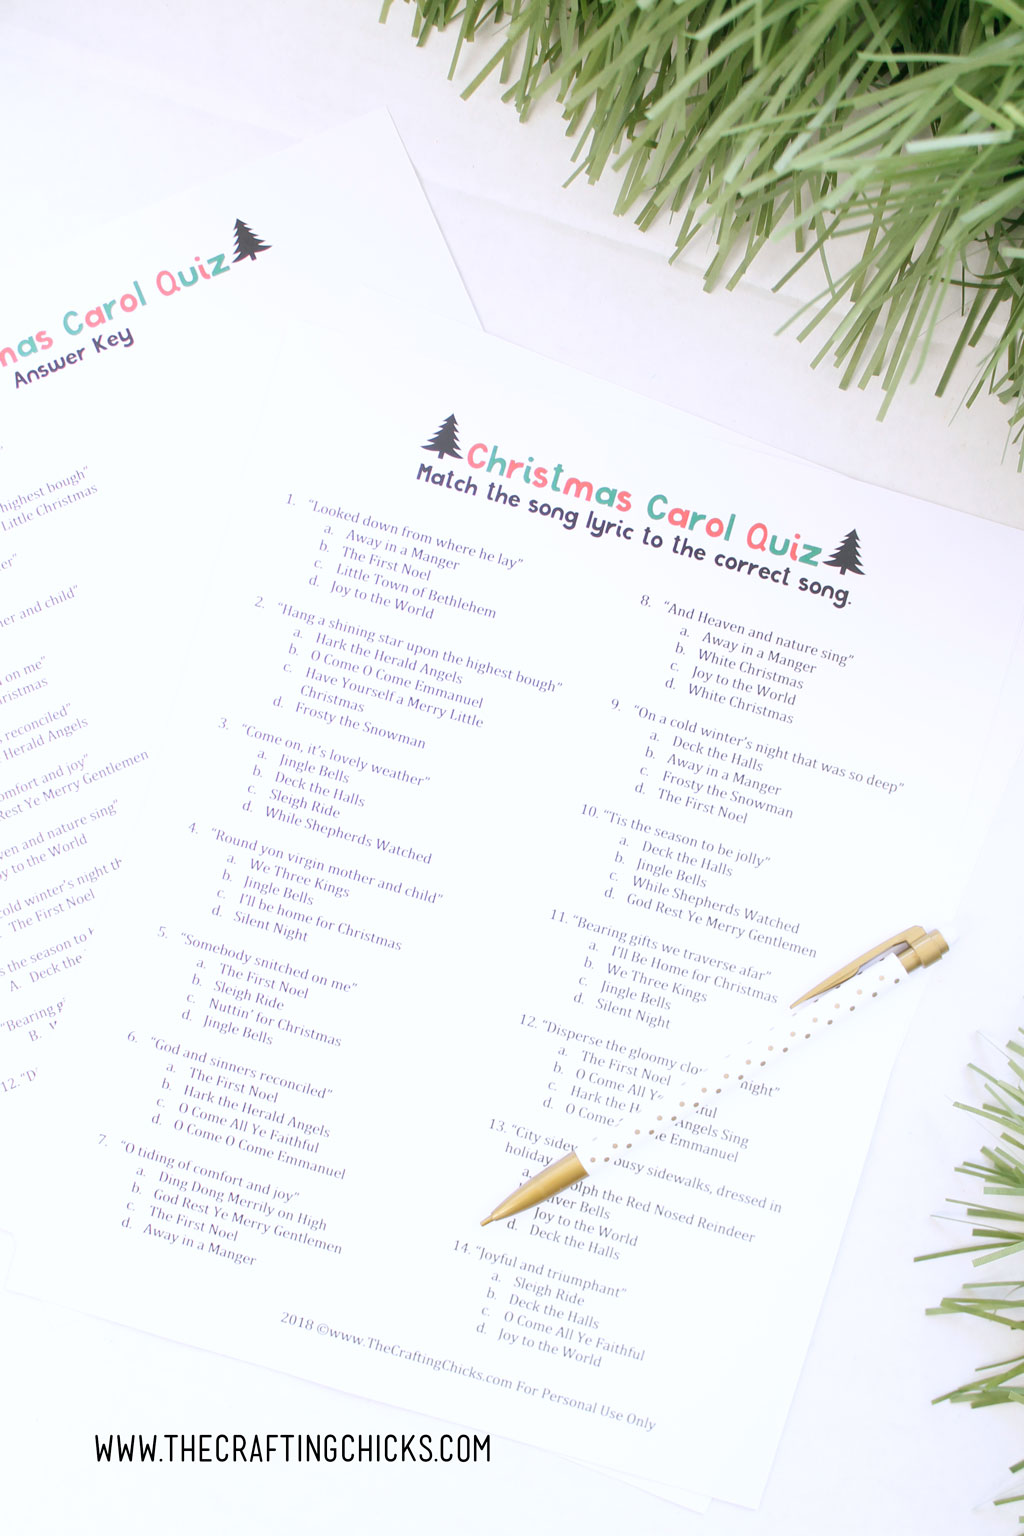 Christmas Carol Quiz Game free printable game for Christmas or holiday parties.